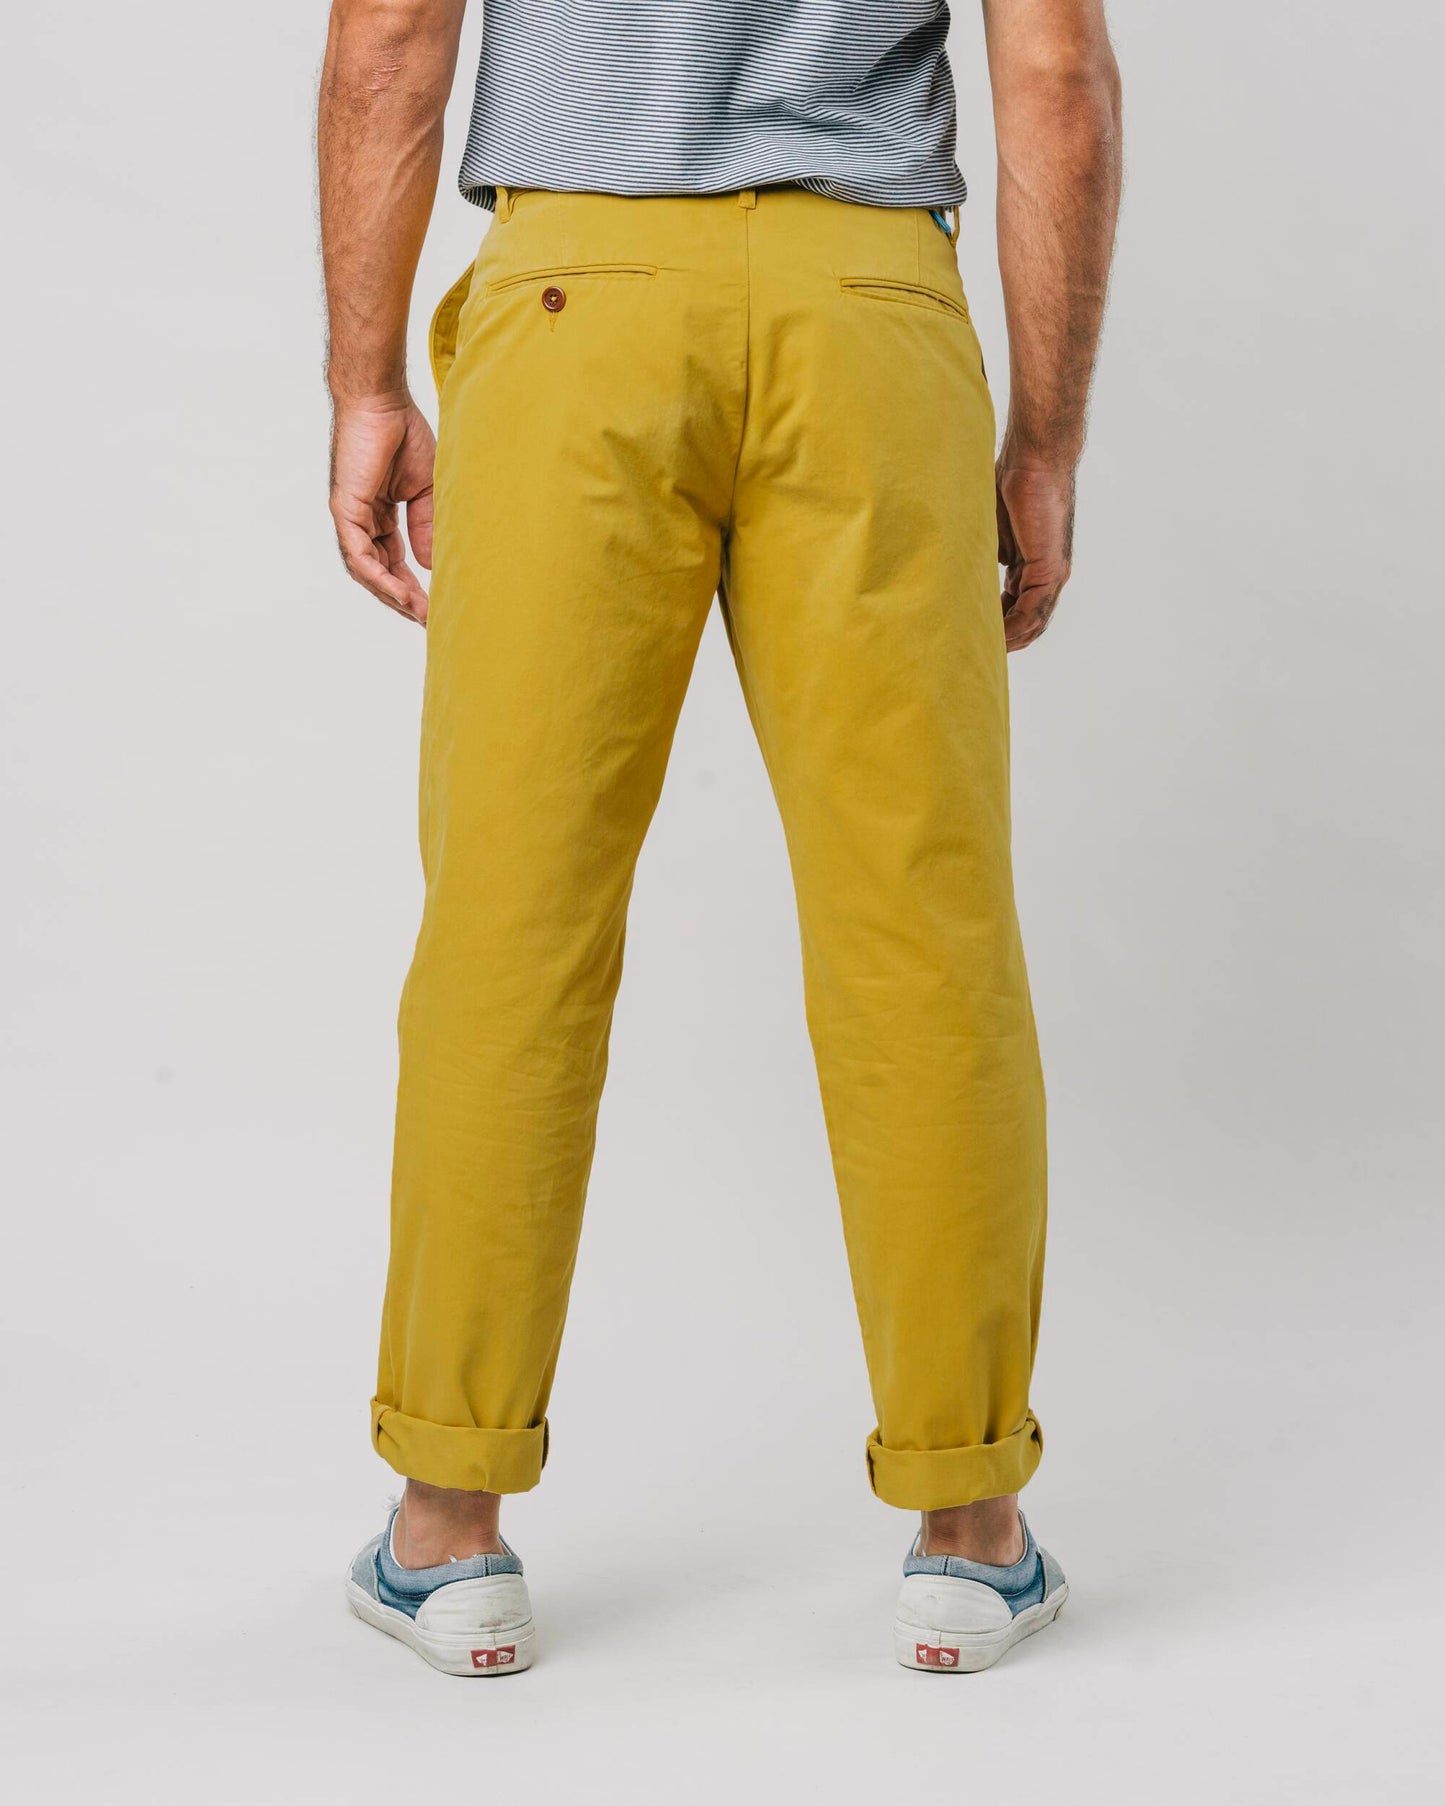 Narciso Pleated Chino Pants